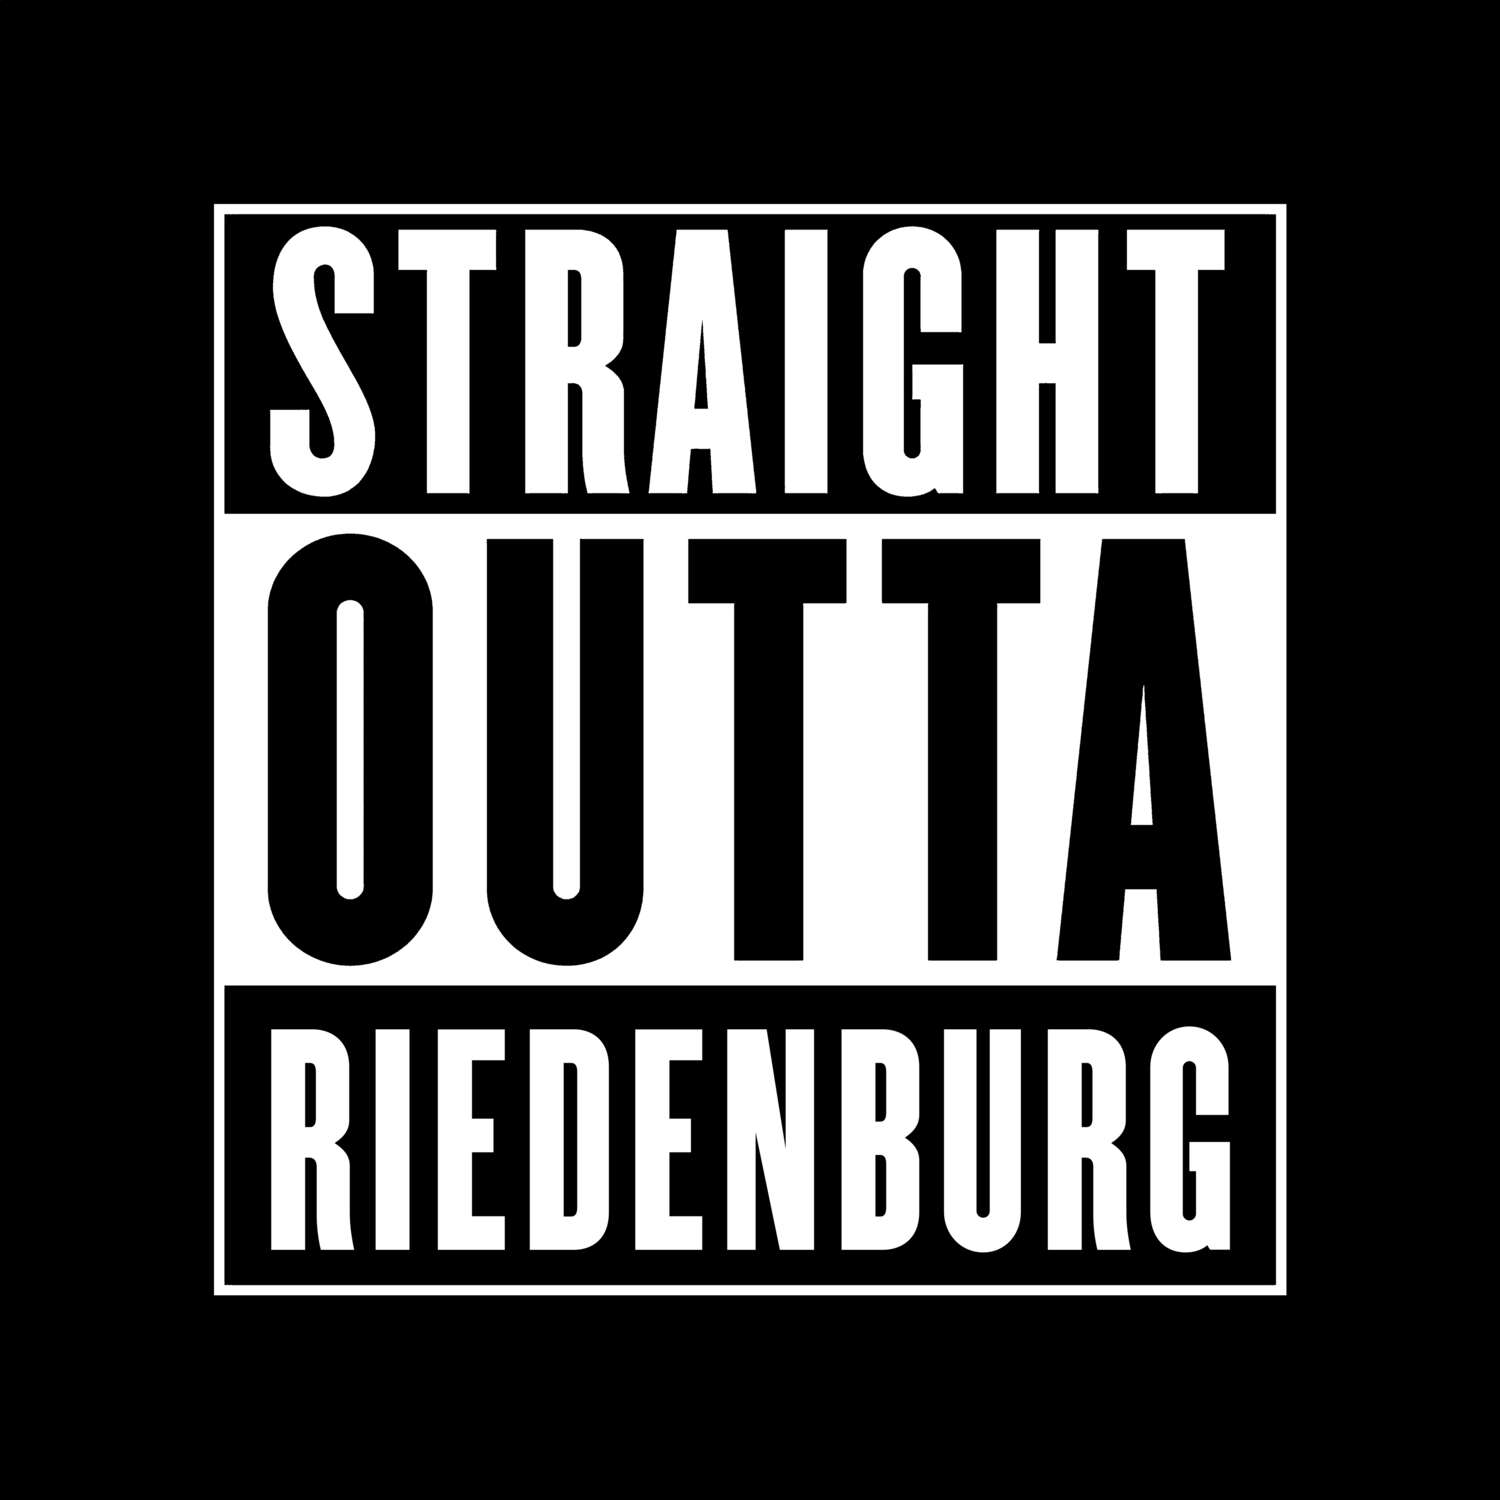 Riedenburg T-Shirt »Straight Outta«